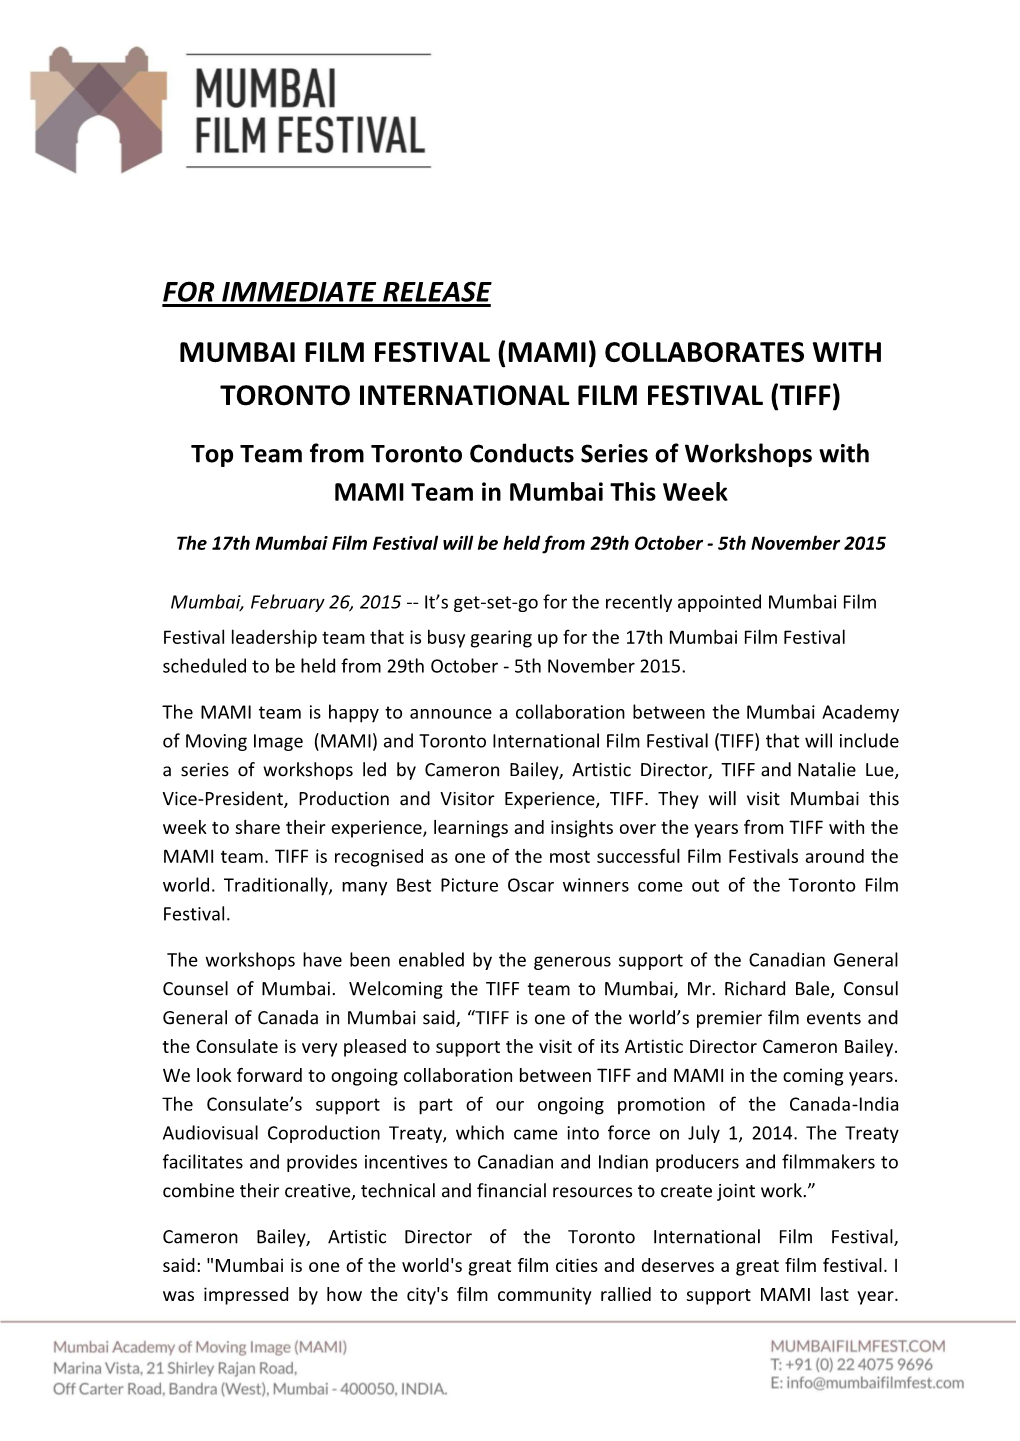 For Immediate Release Mumbai Film Festival (Mami) Collaborates with Toronto International Film Festival (Tiff)